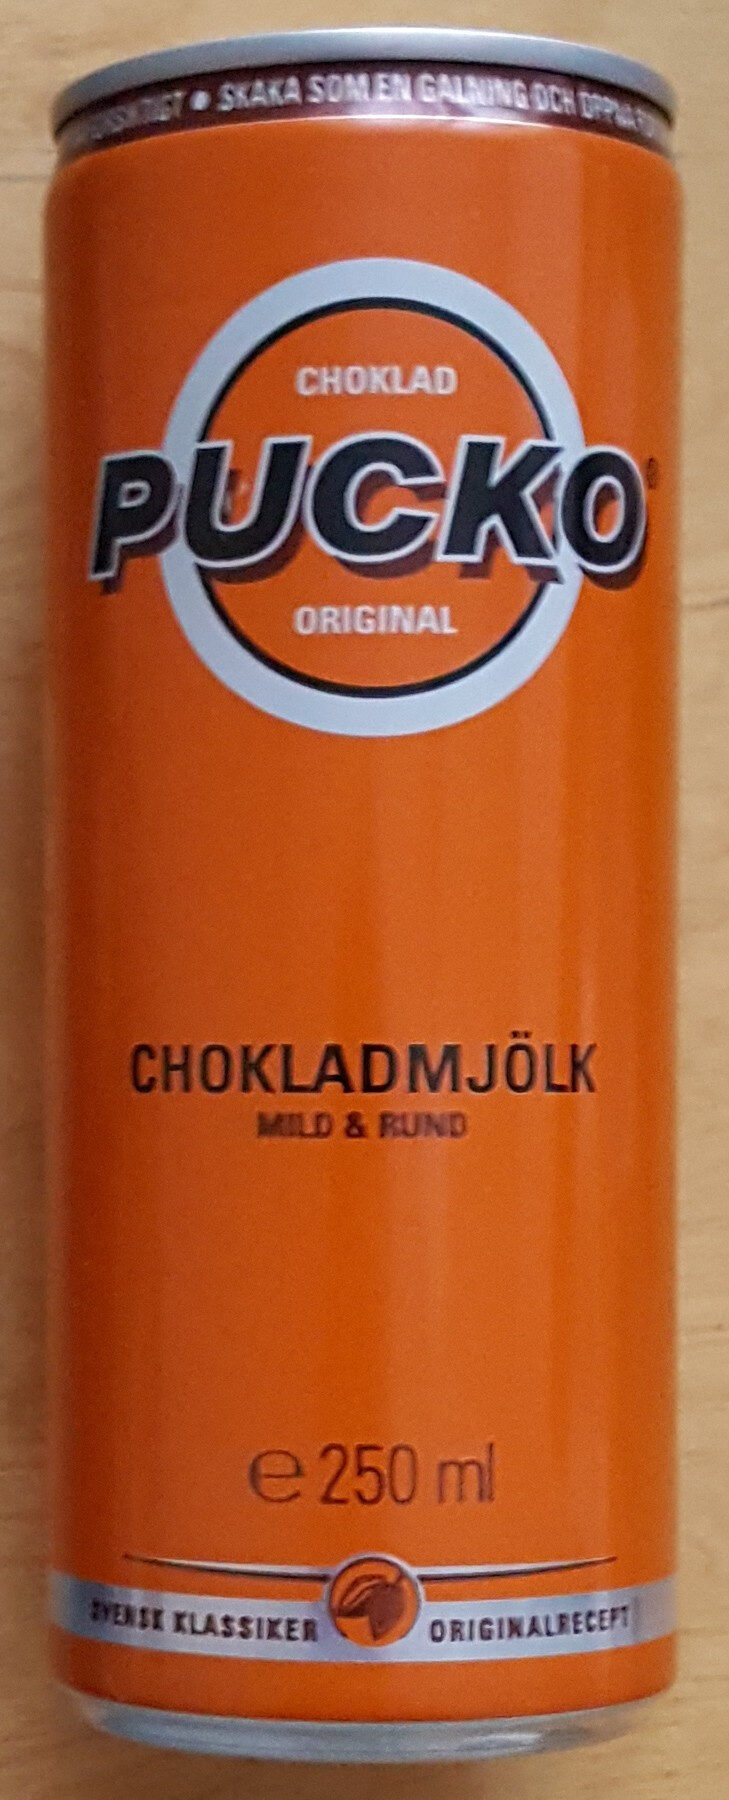 Pucko Chokladmjölk MIld & Rund - Product - sv